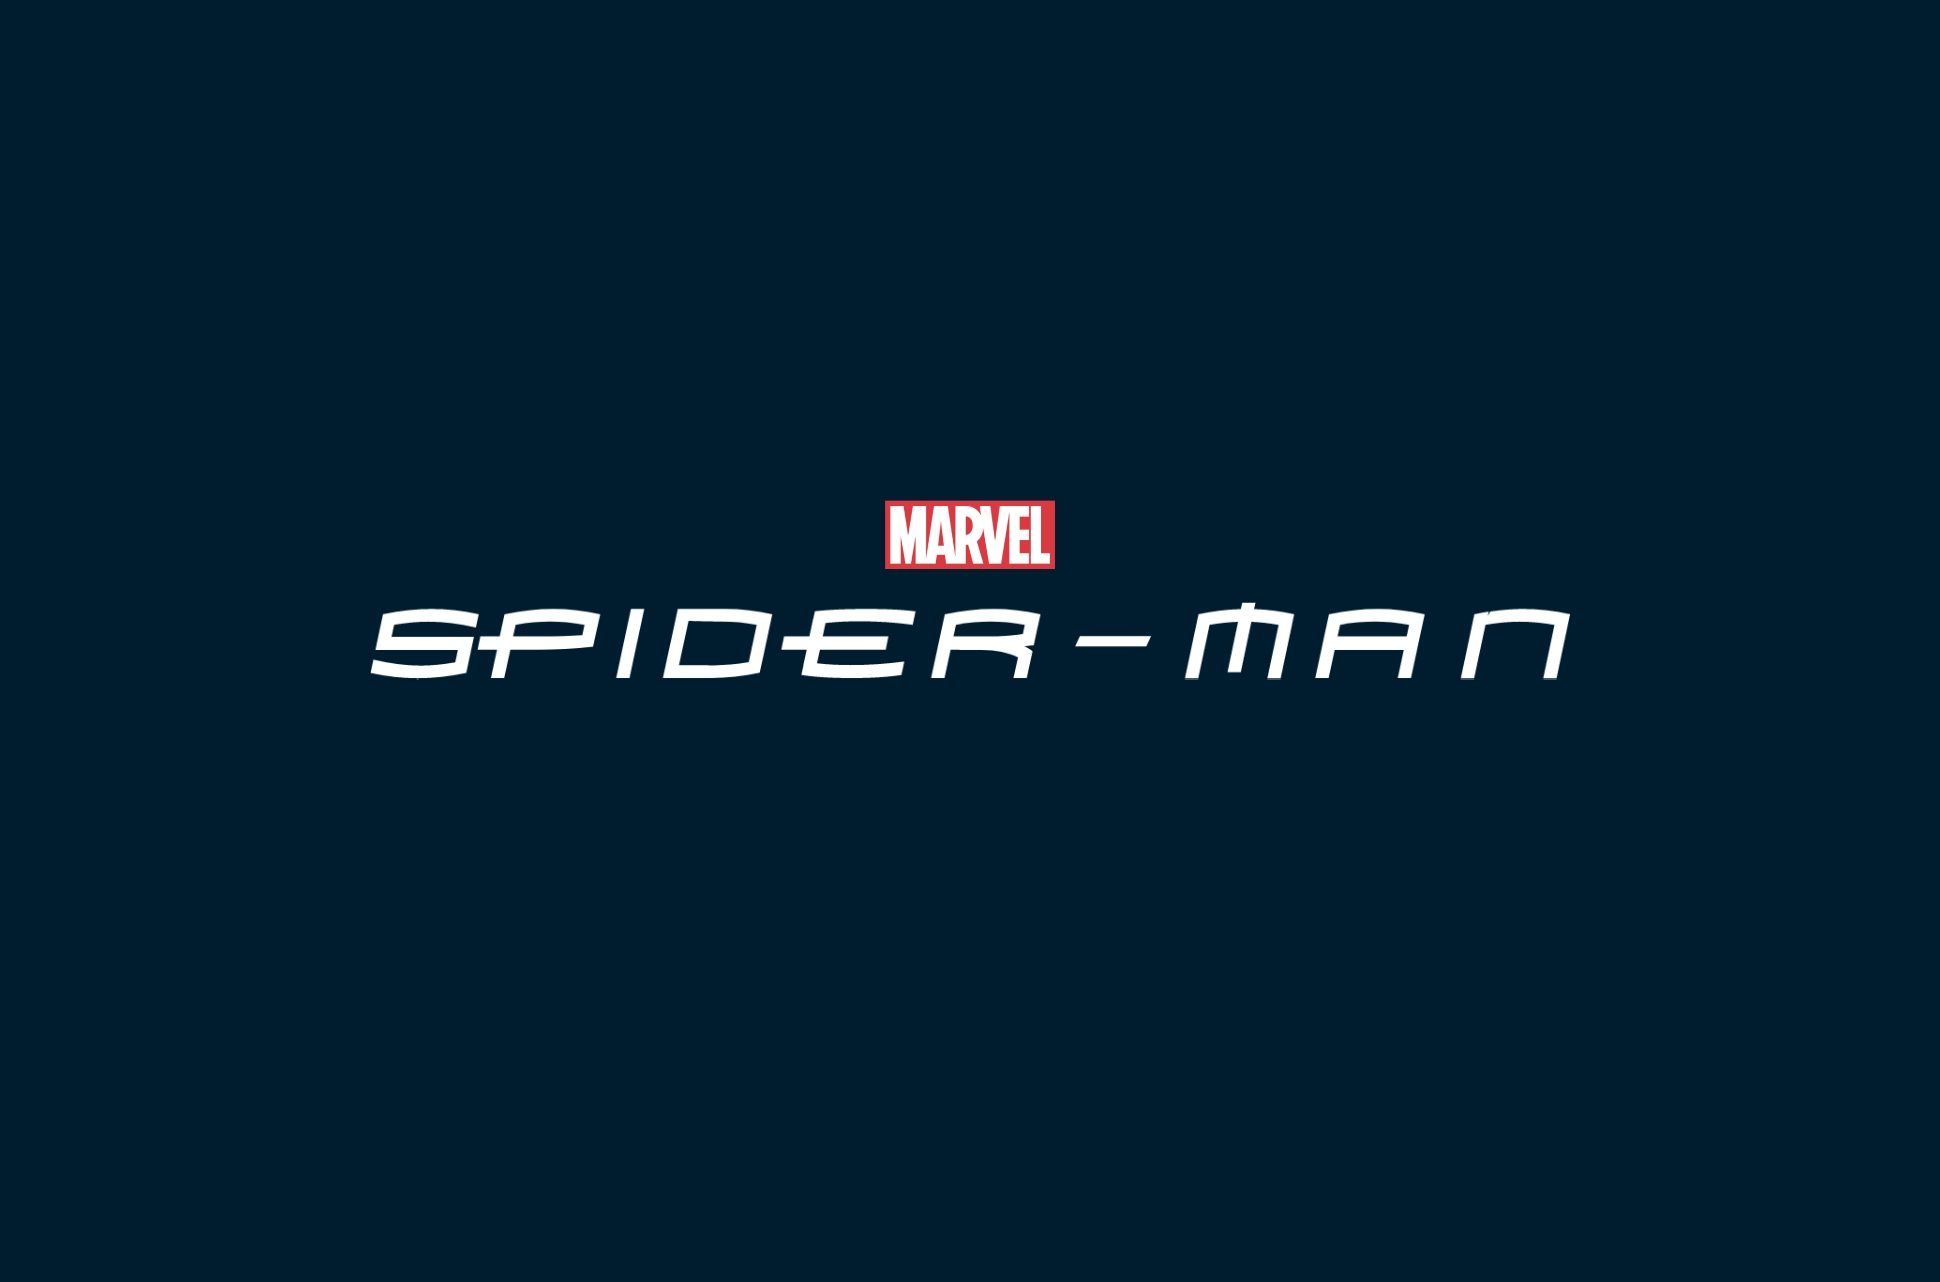 Sam Raimi's Spider-Man films.